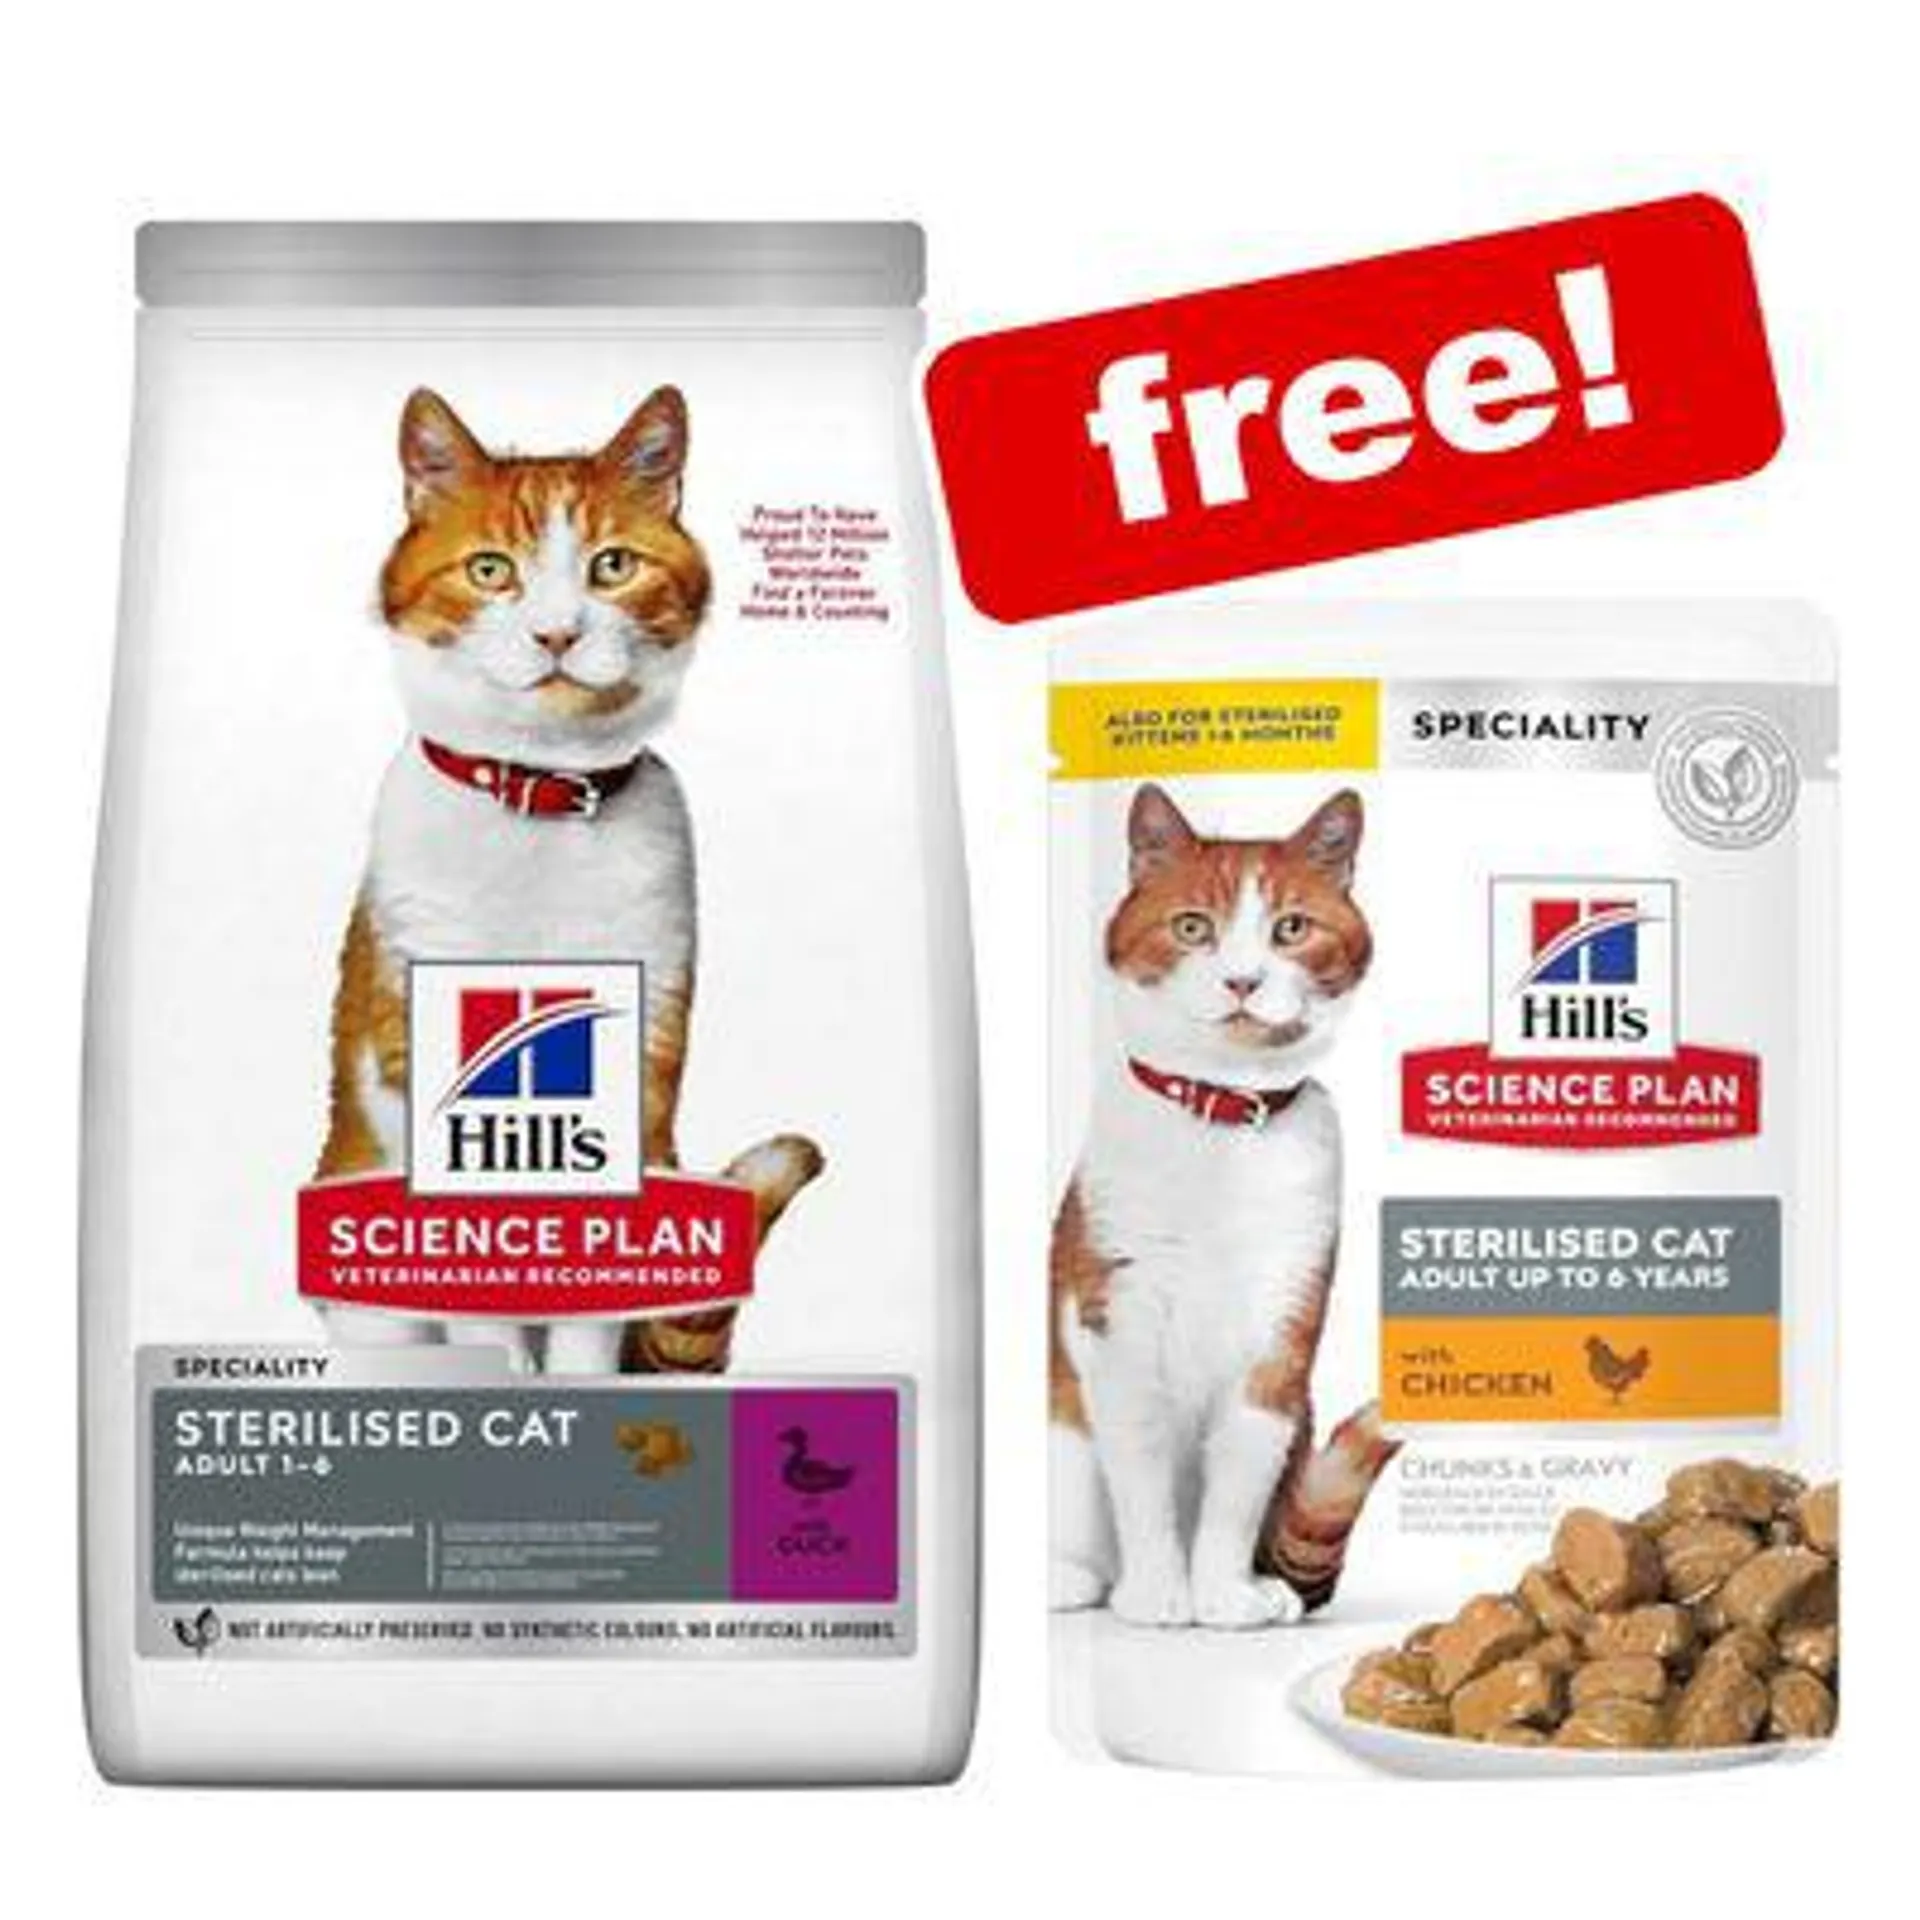 7kg/10kg Hill’s Science Plan Adult/Kitten Dry Cat Food + Wet Food Free! *